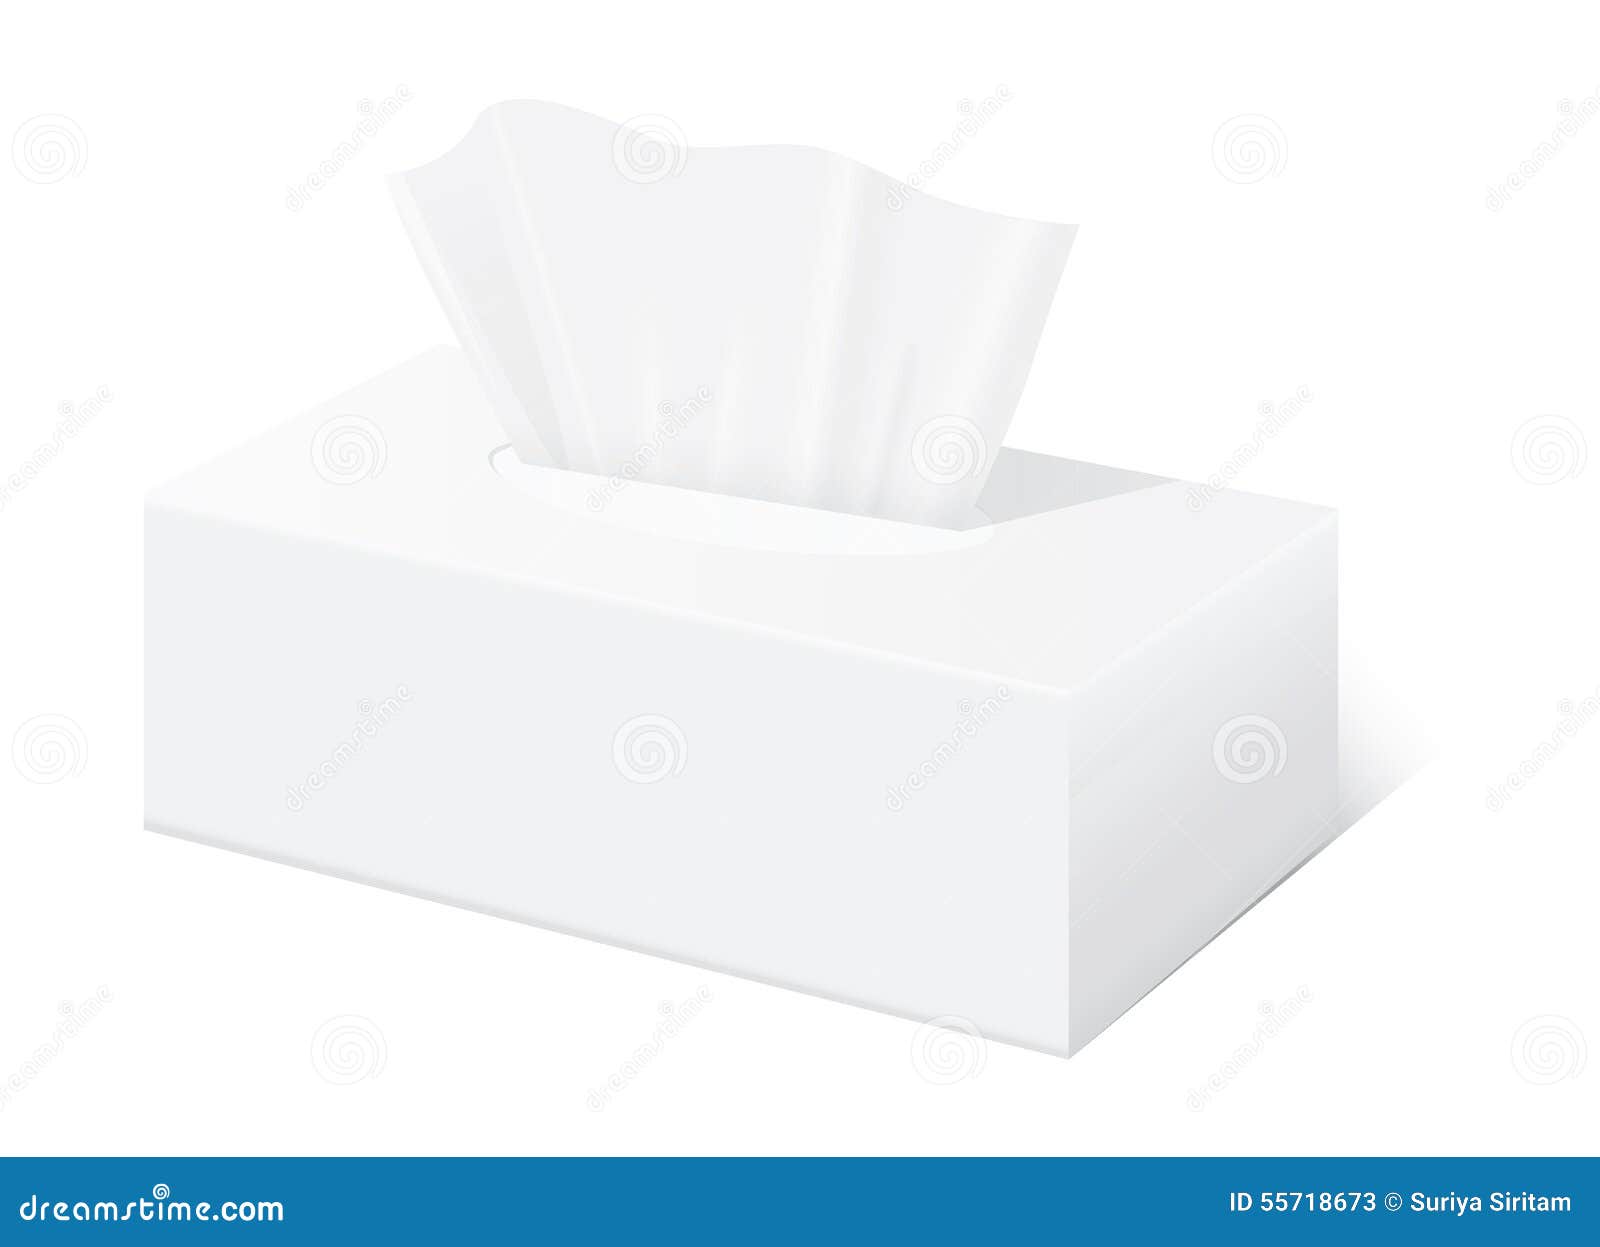 white tissue box mock up